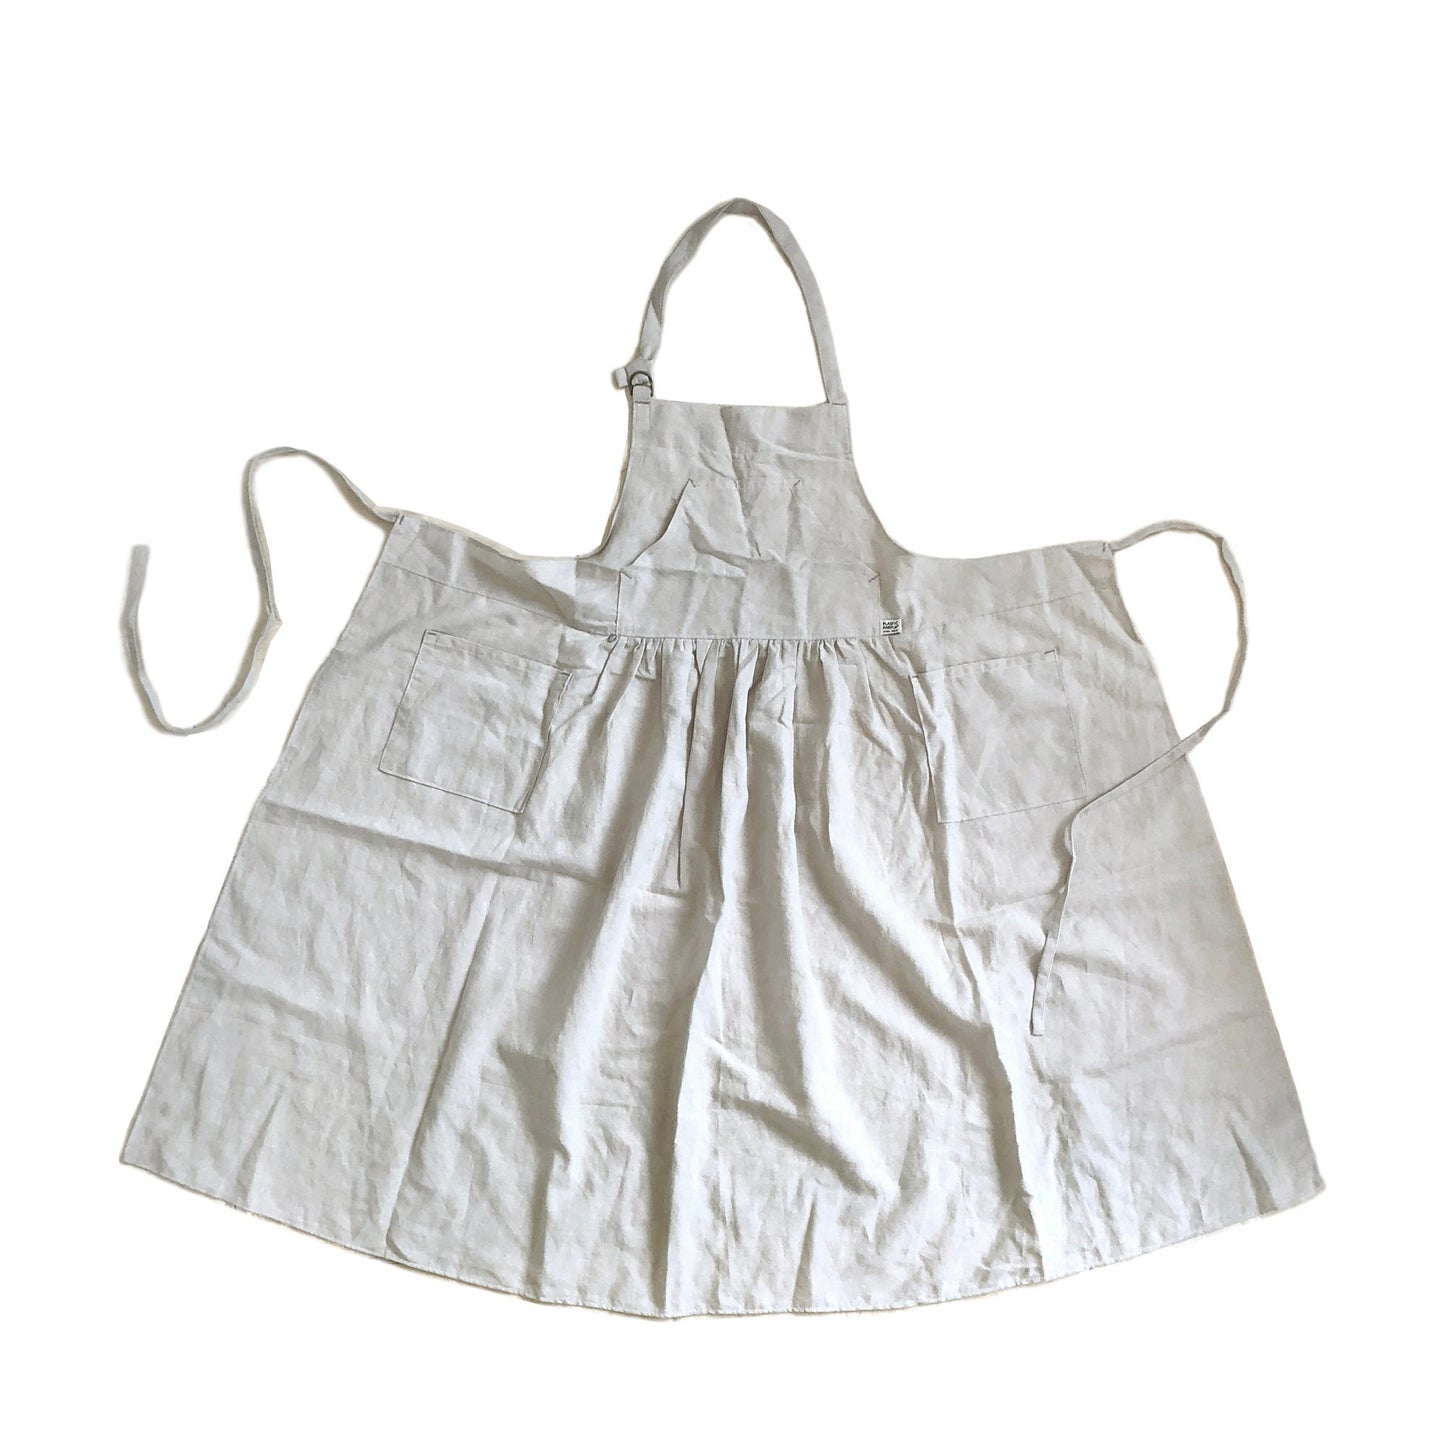 Linen cotton sherring apron